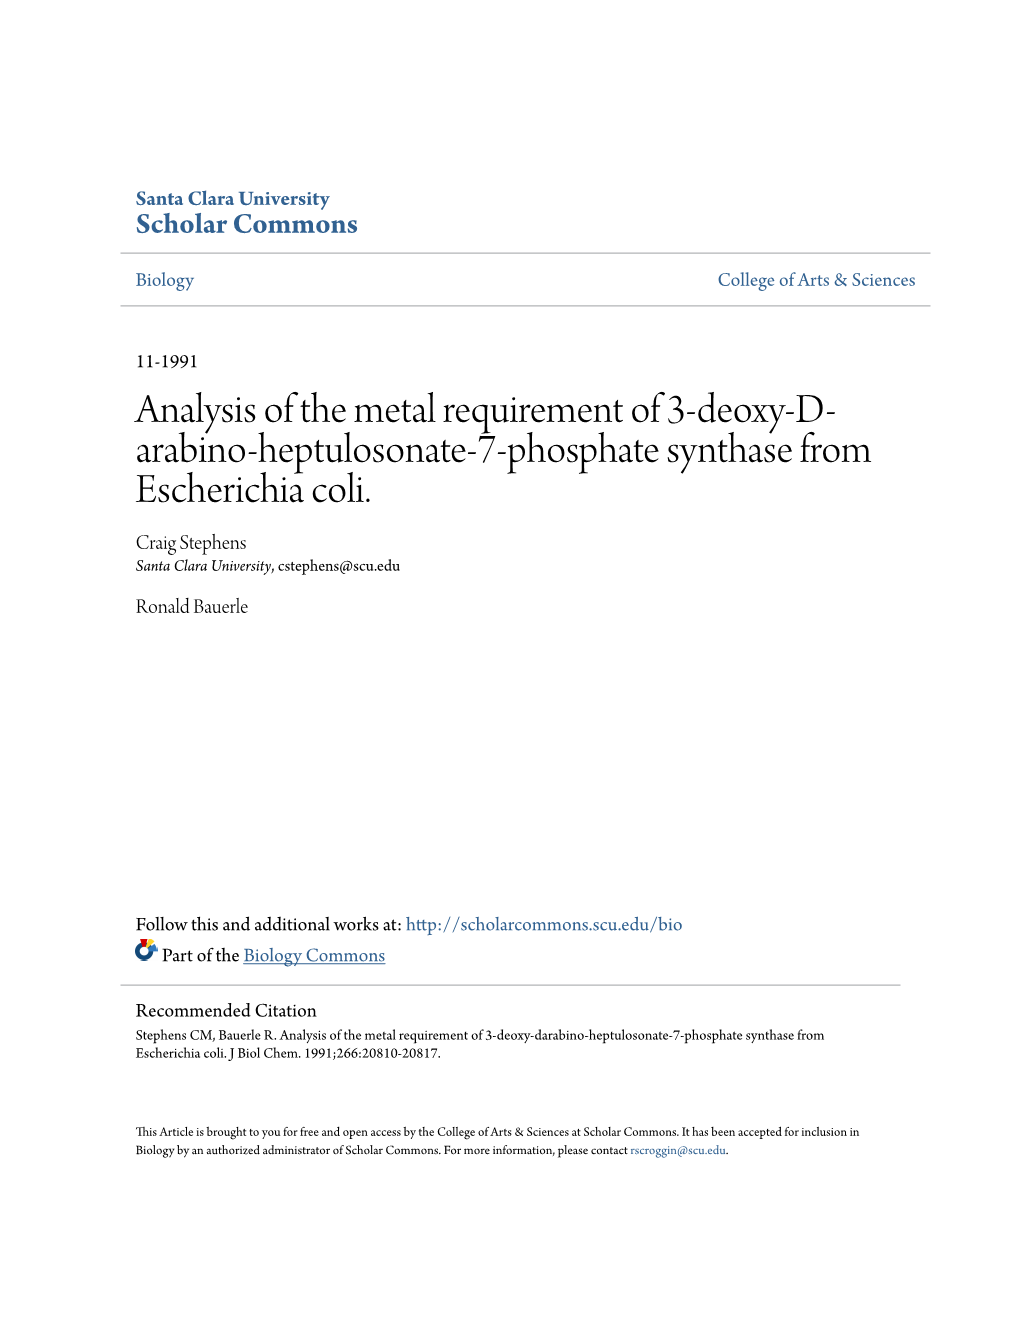 Analysis of the Metal Requirement of 3-Deoxy-D-Arabino-Heptulosonate